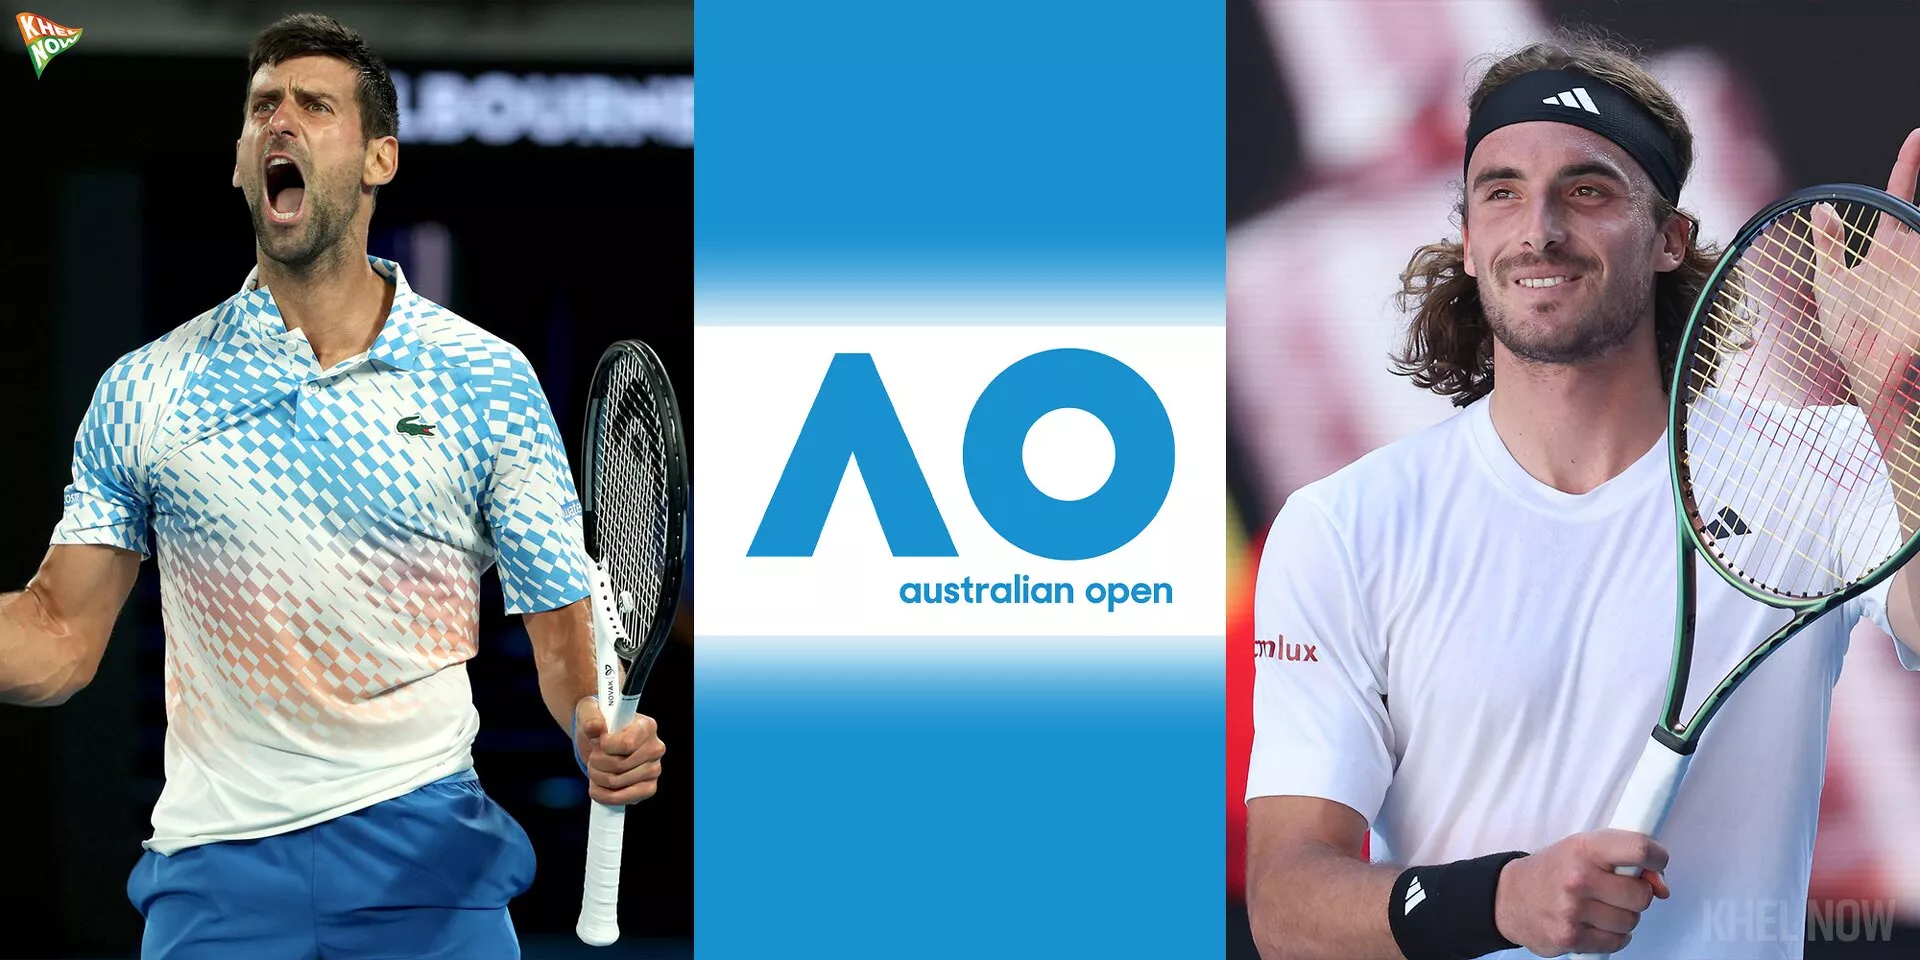 Stefanos Tsitsipas vs Novak Djokovic, Australian Open 2023 Preview, head to head, prediction